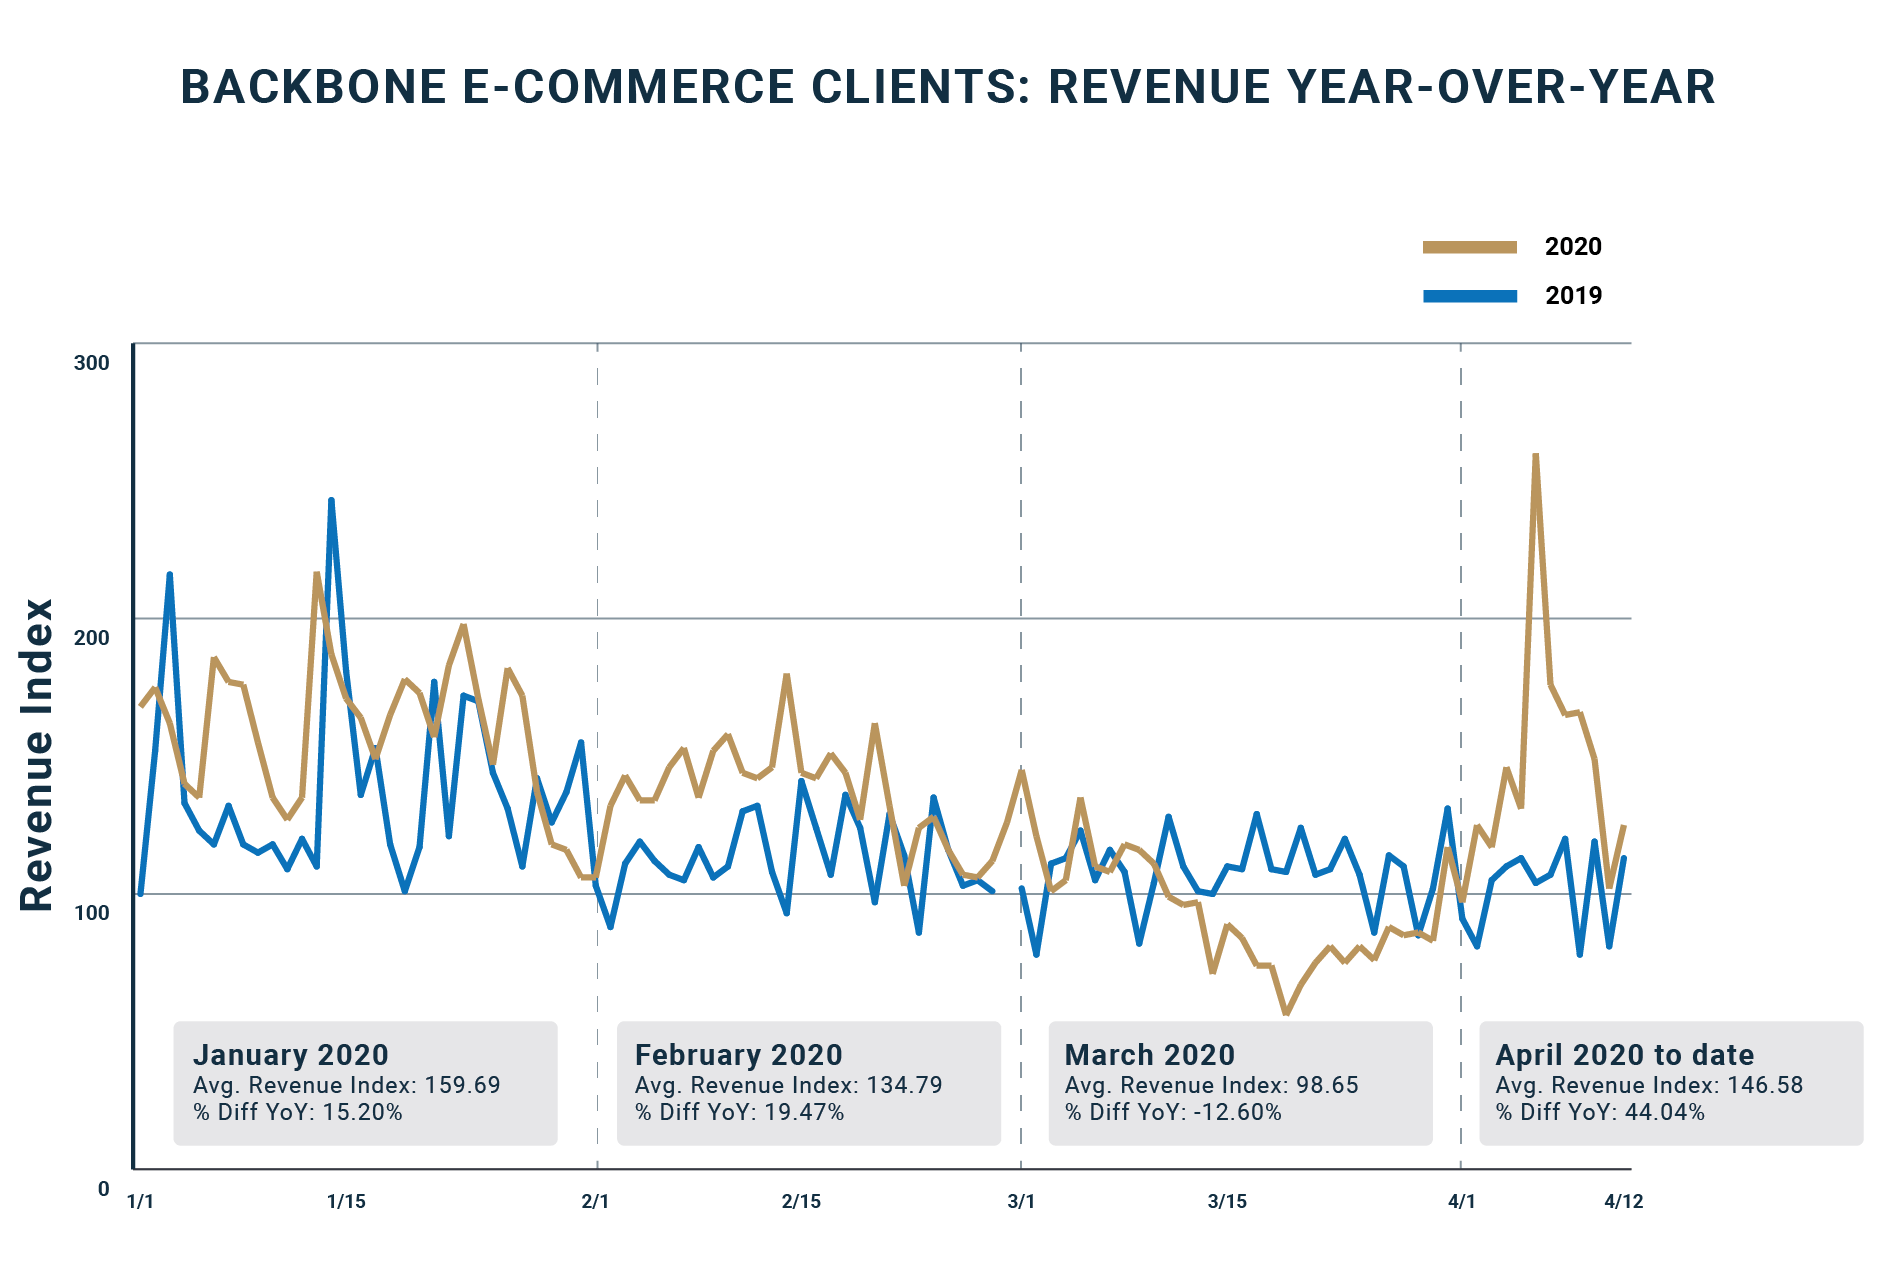 Backbone e-commerce revenue YoY